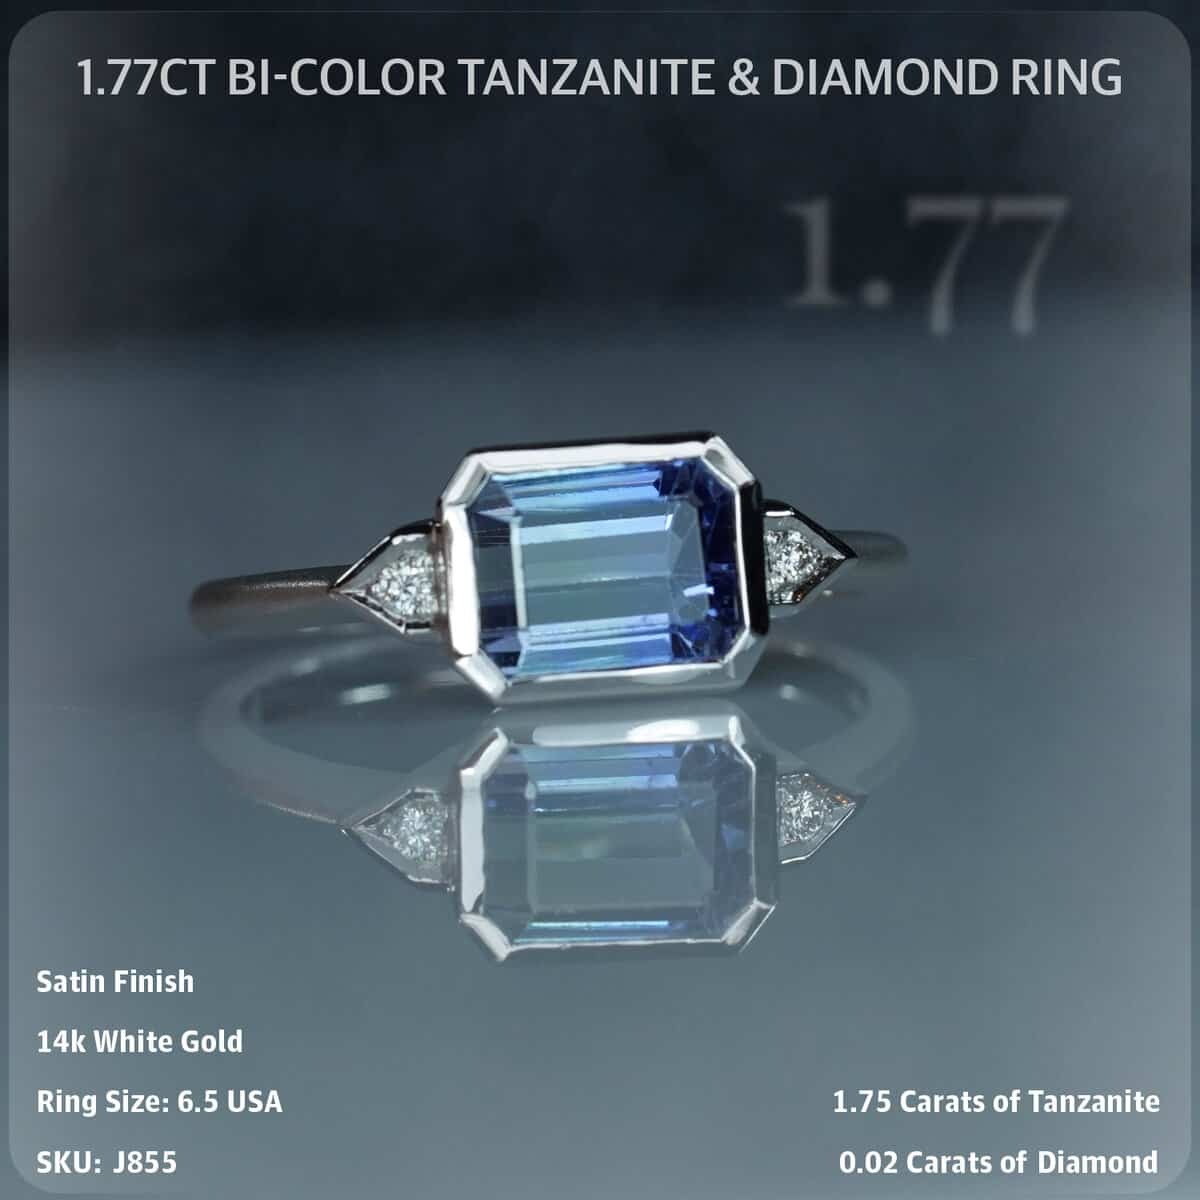 1.77CT Bi-Color Tanzanite & Diamond Ring